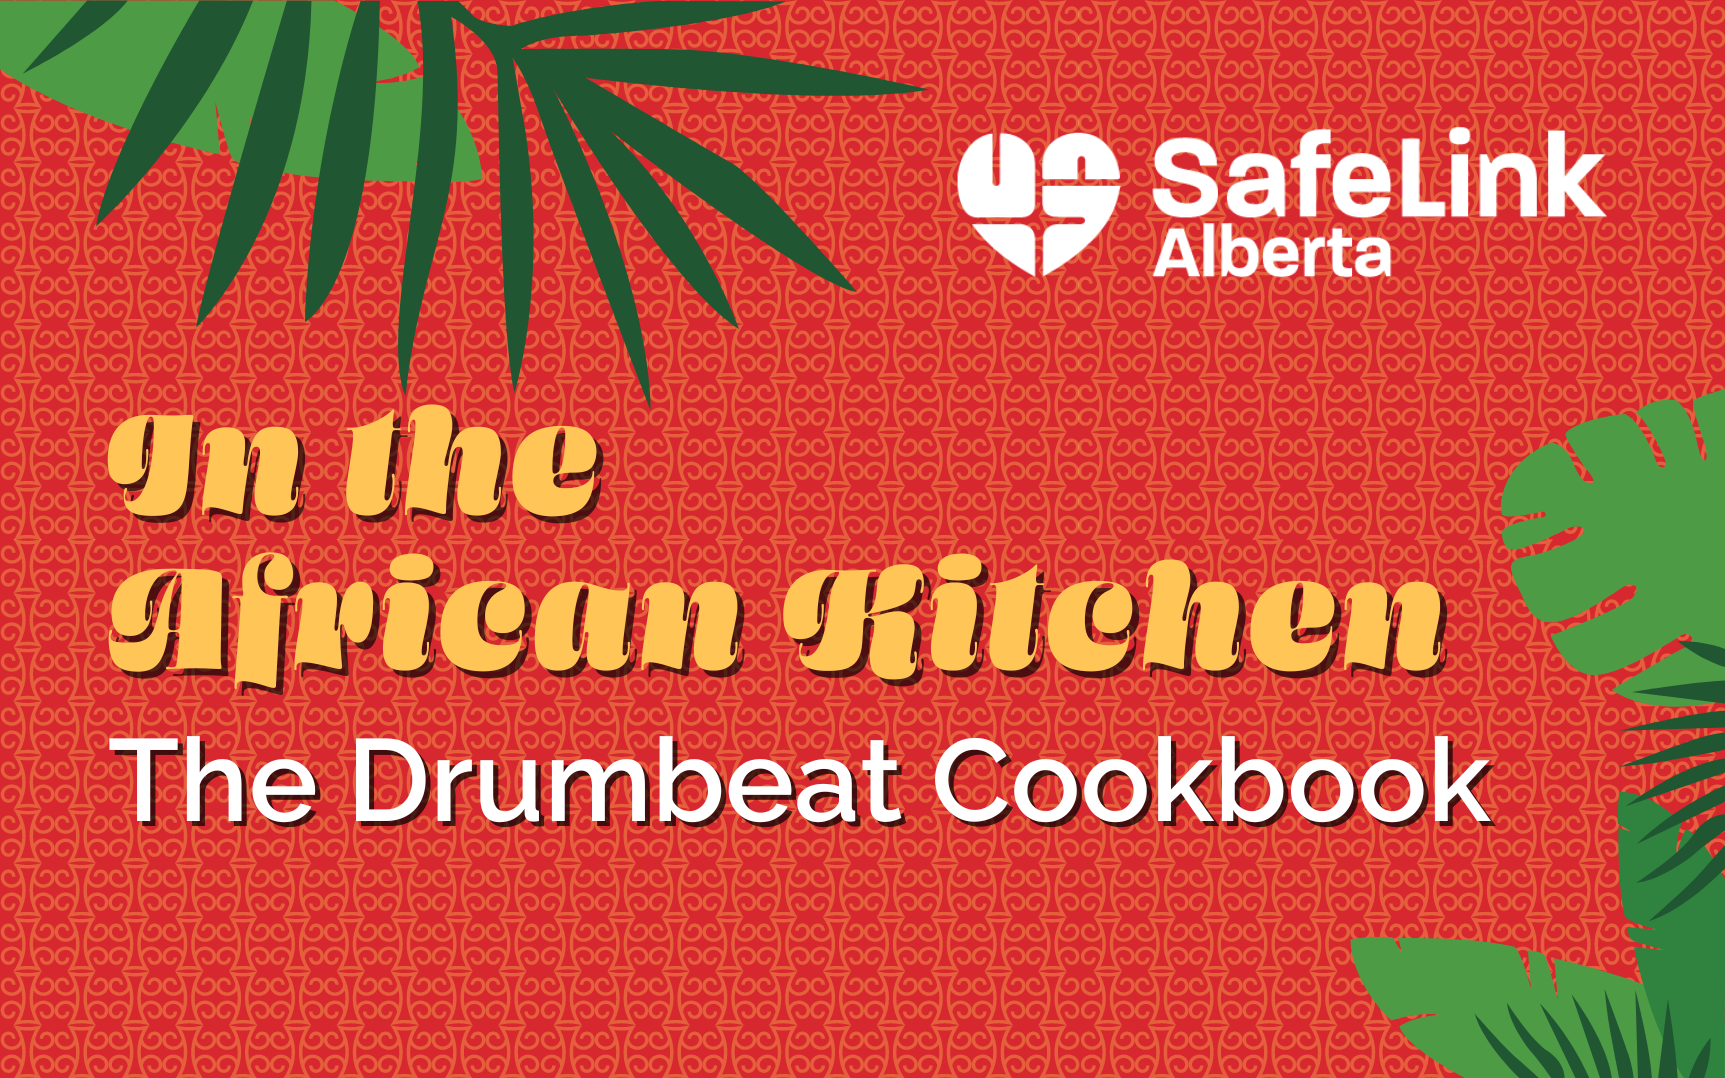 Drumbeat Program Cookbook: In the African Kitchen